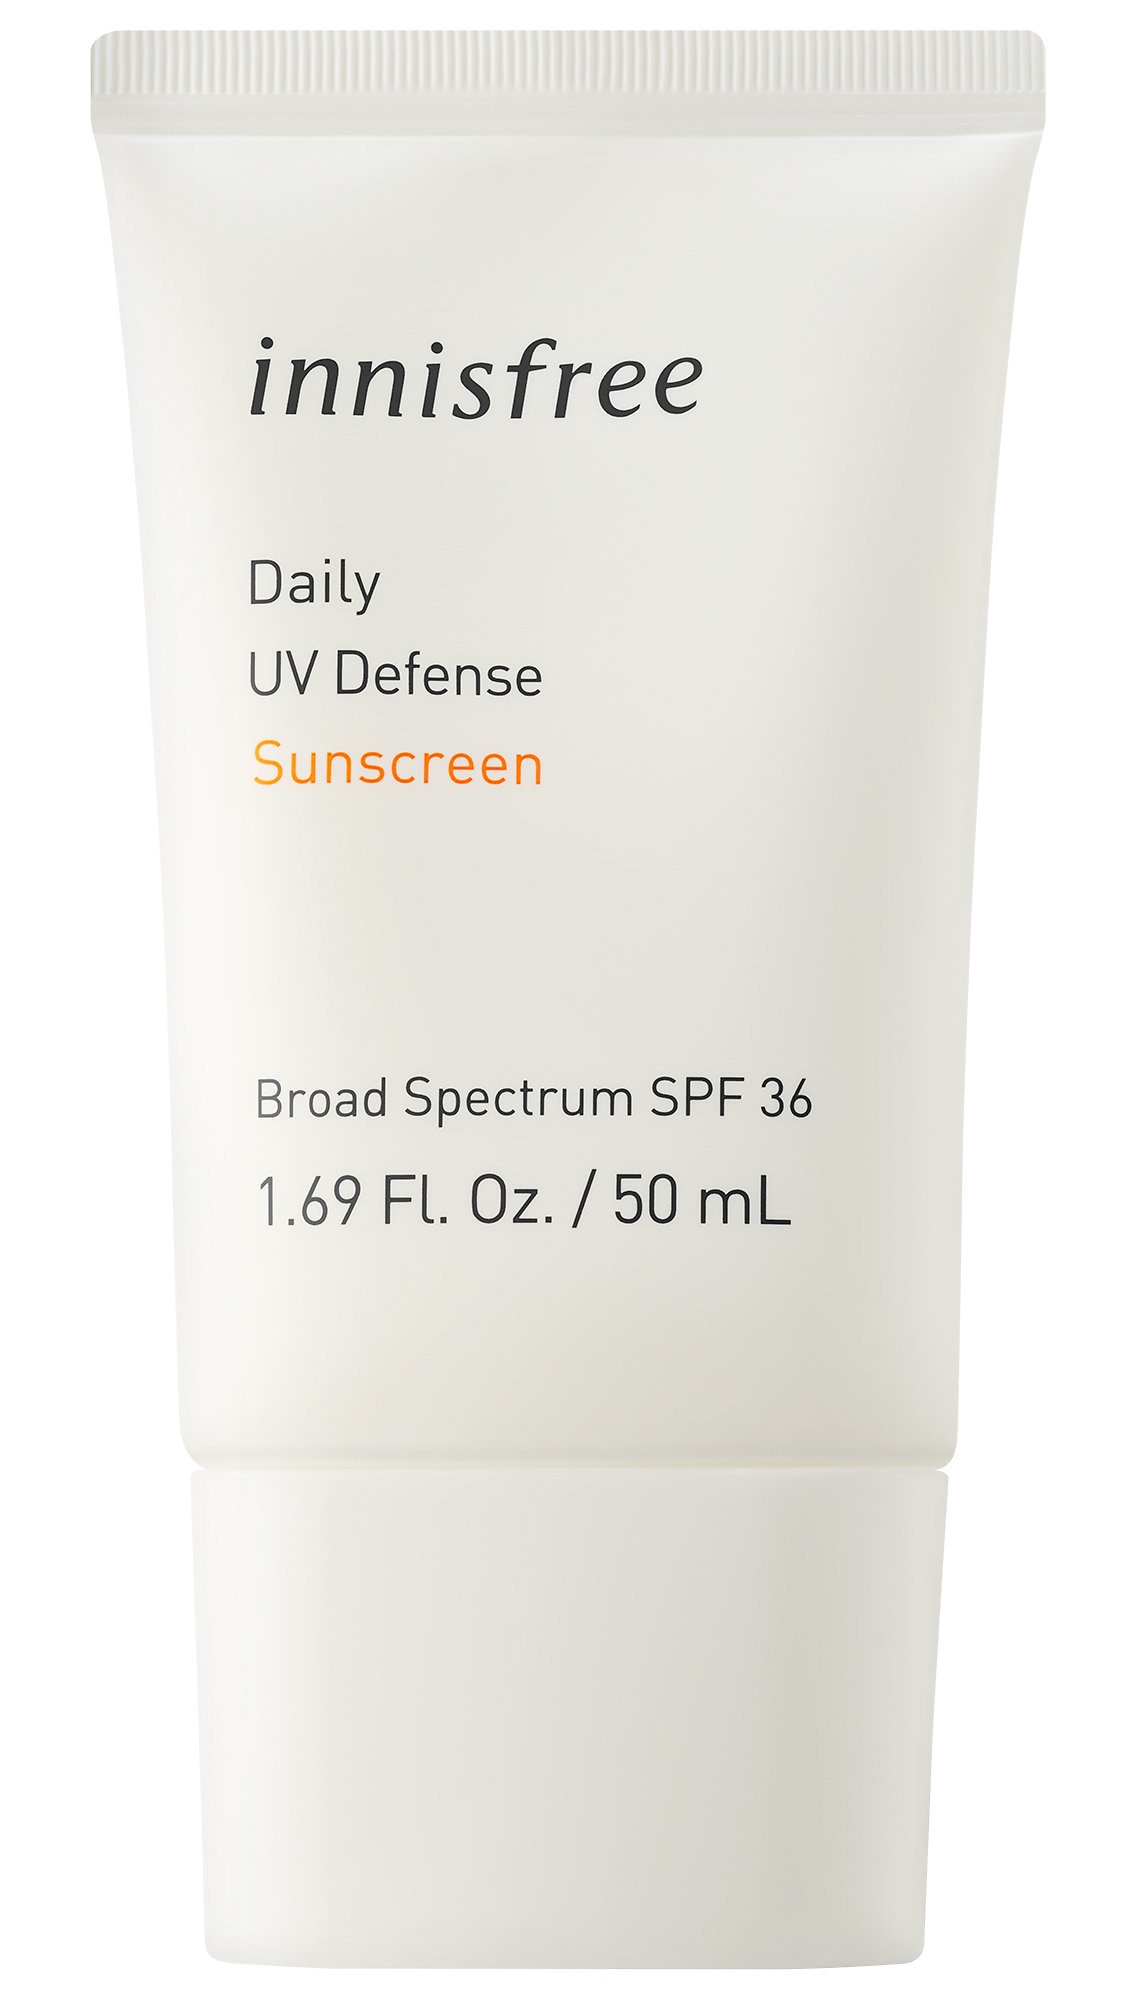 innisfree Daily uv defense sunscreen